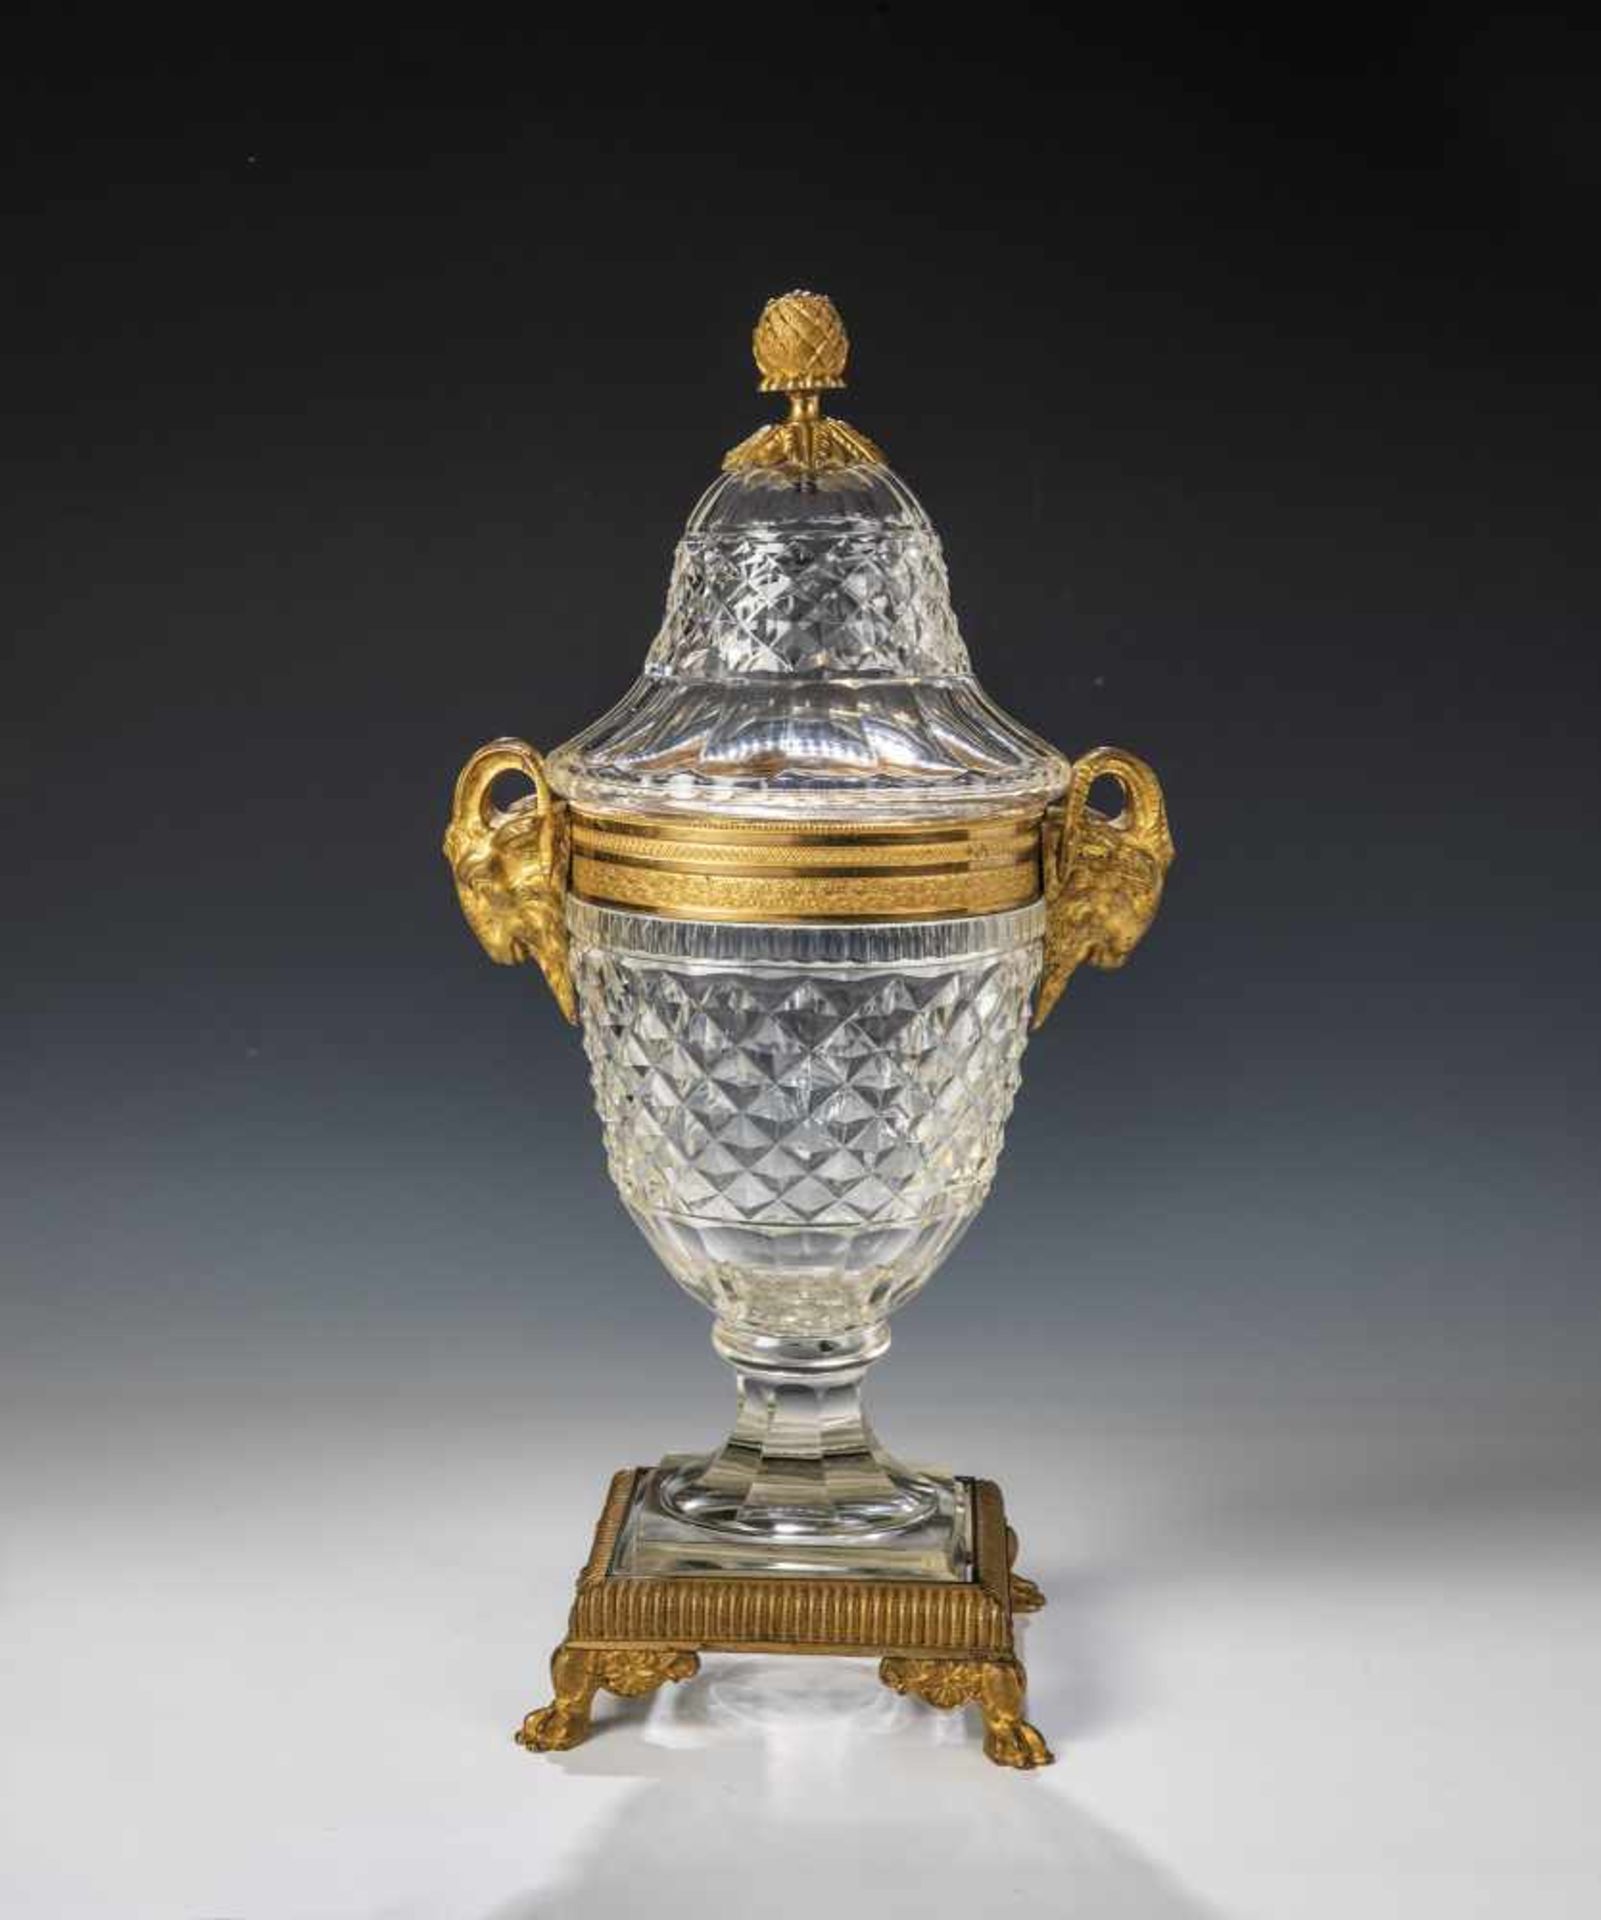 An ormolu mounted glass lidded glass vessel. Russia, circa 1820. On four feet. Colourlesscutted